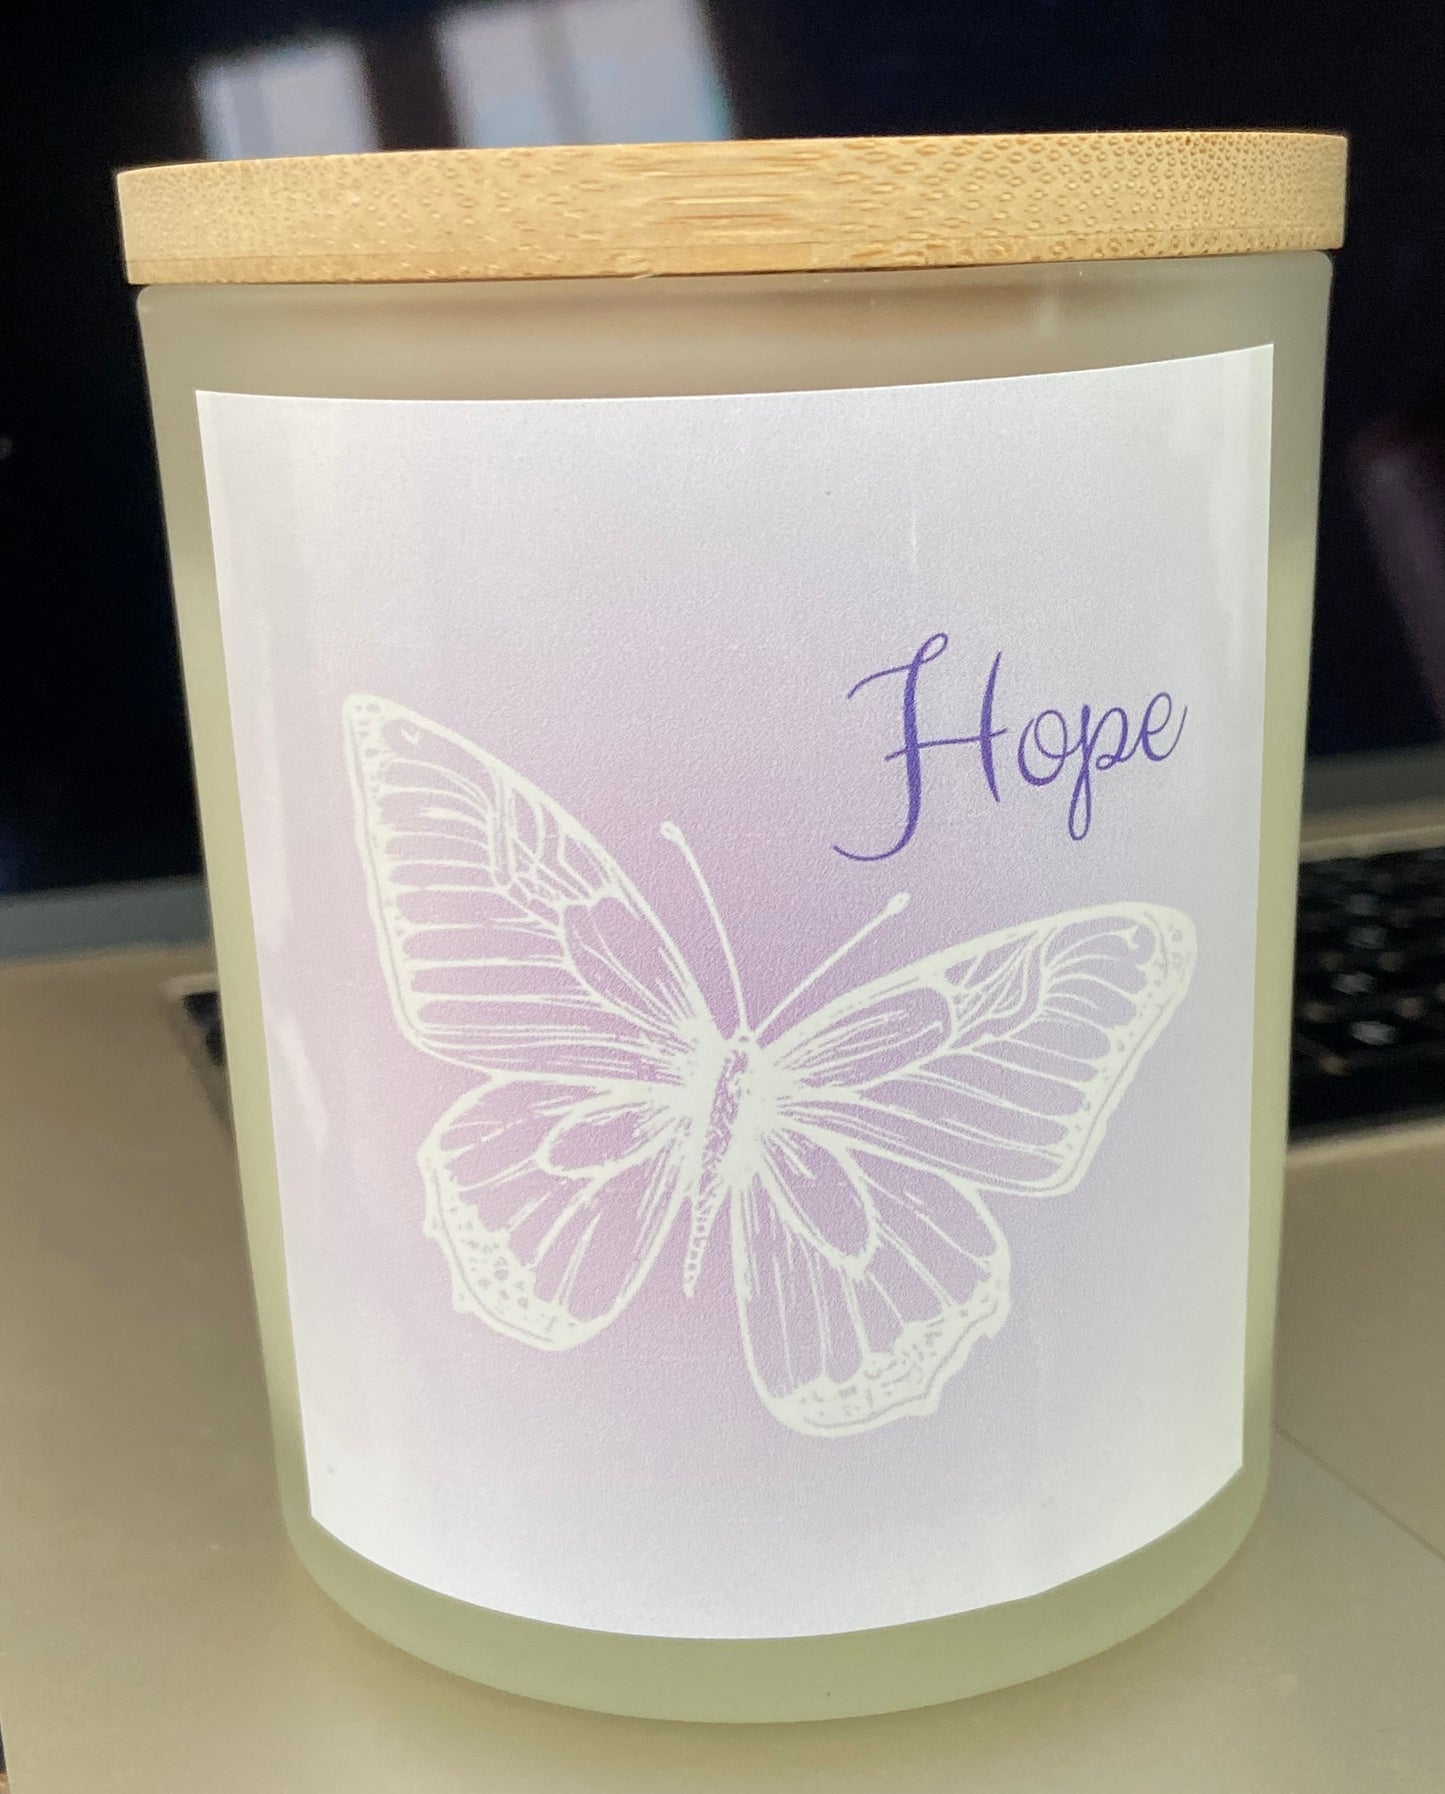 "HOPE" candle